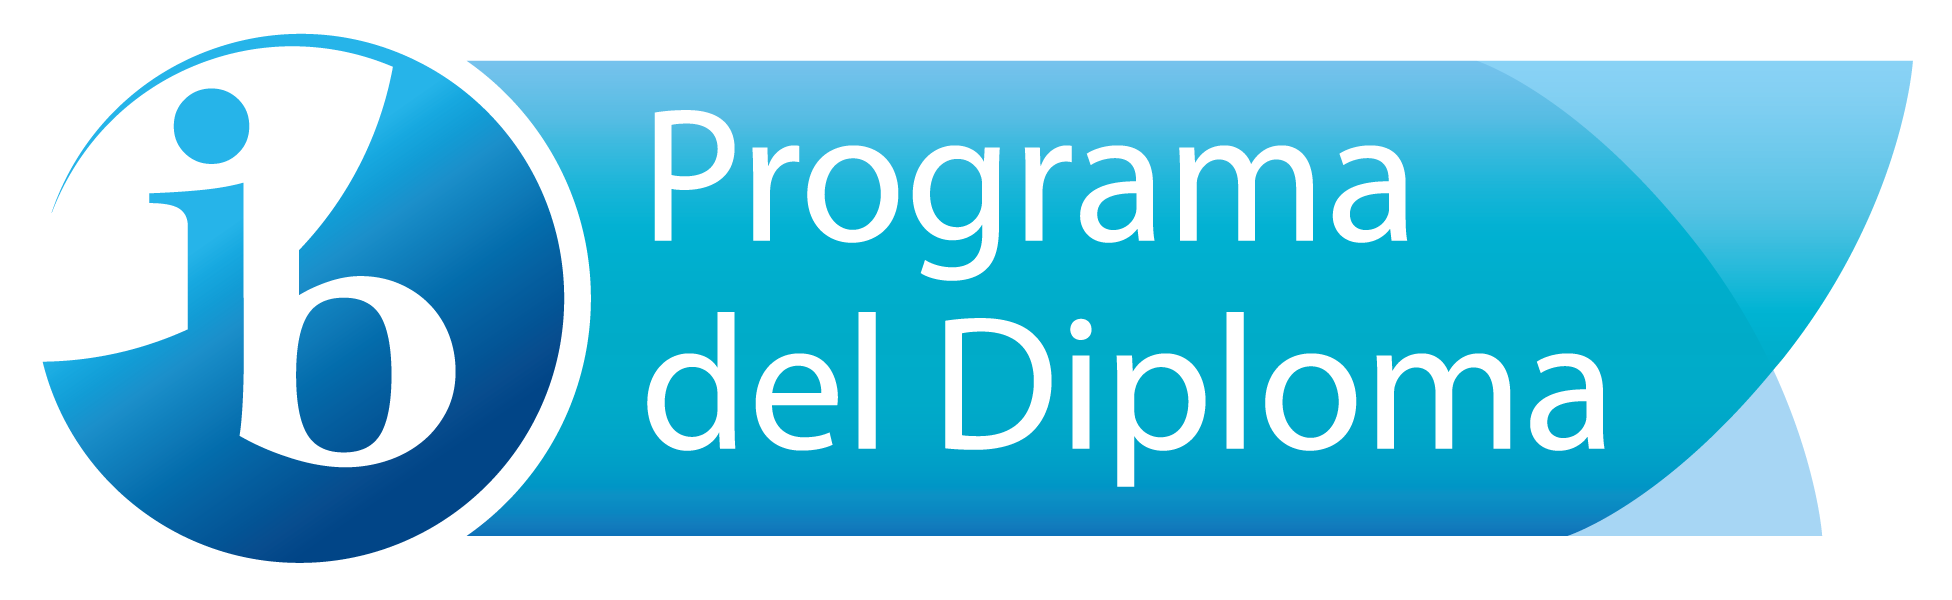 dp-programme-logo-es.png